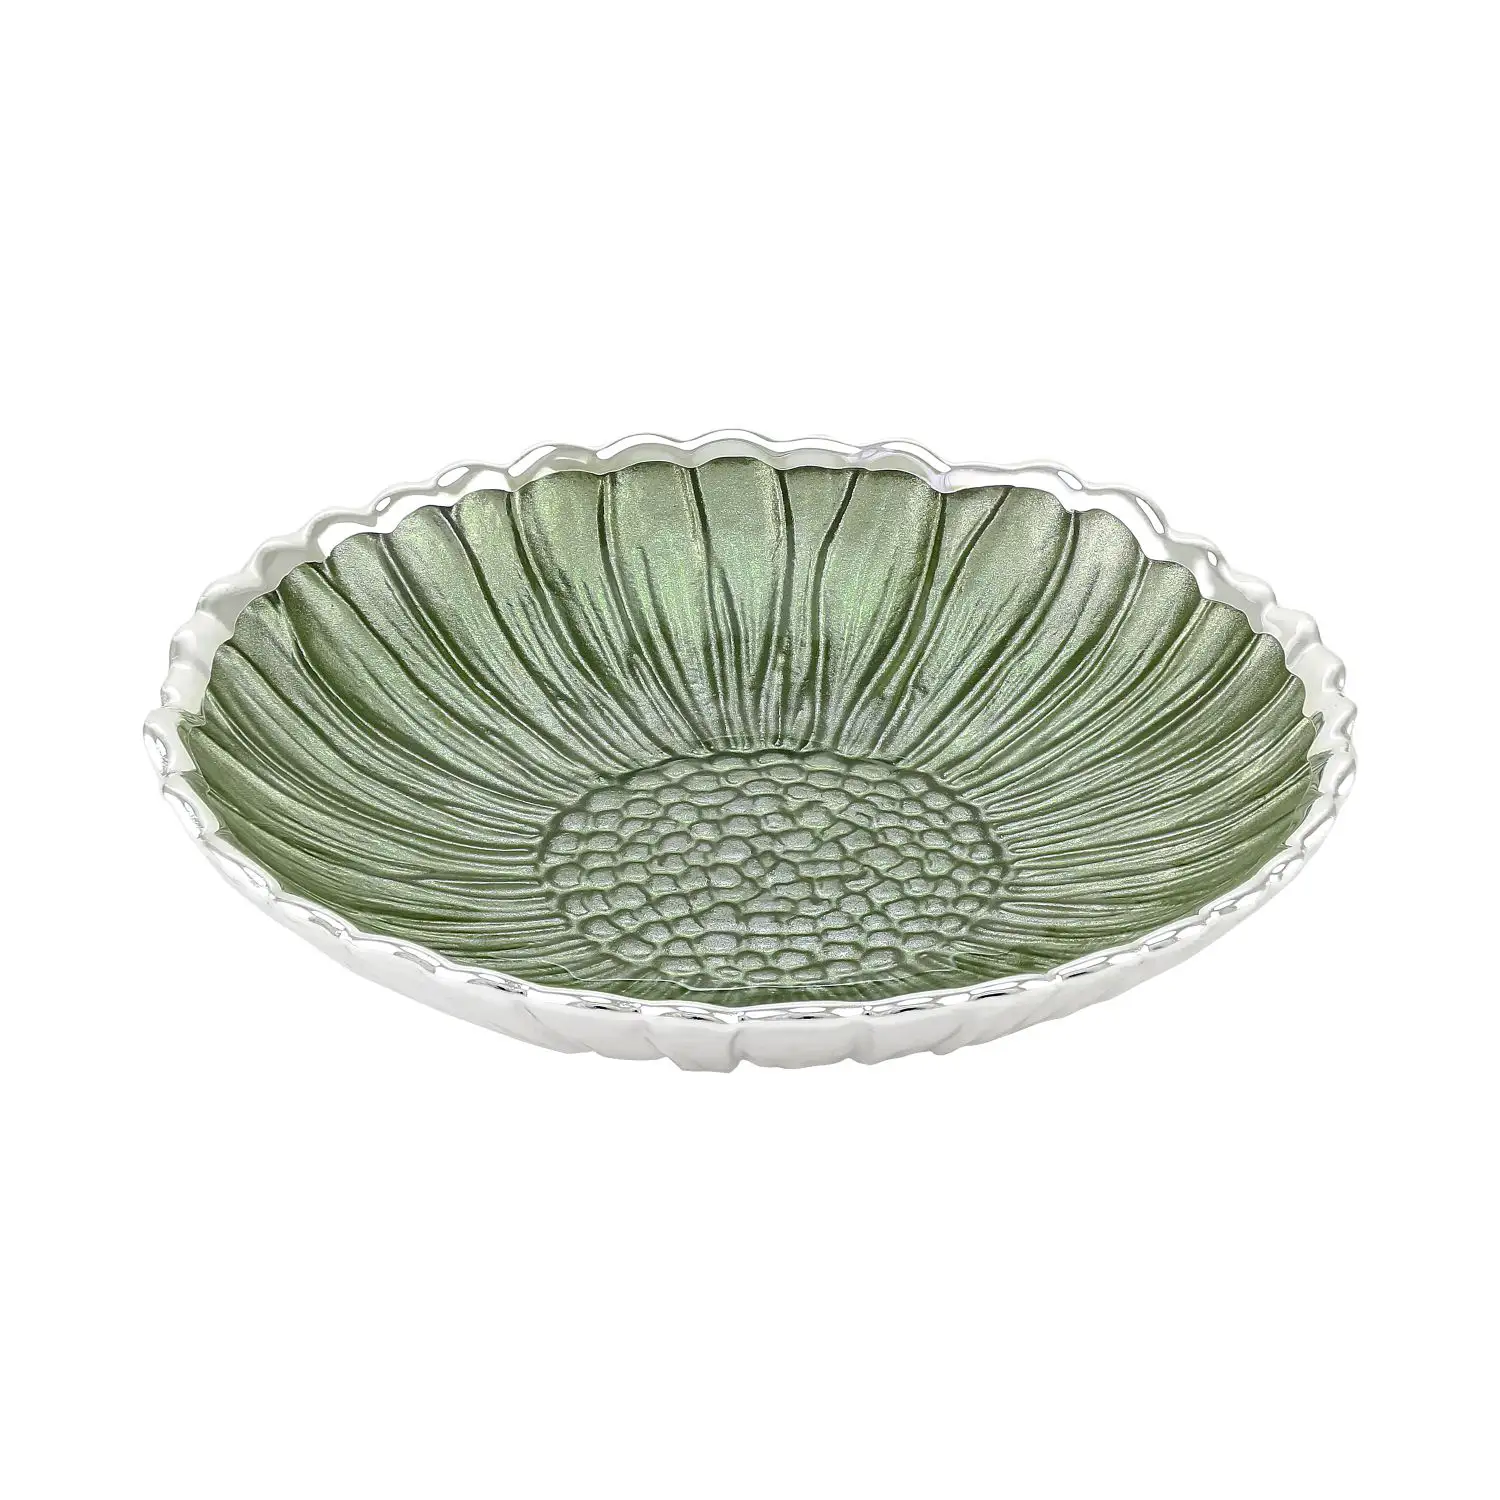 Тарелка стеклянная GIRASOLE (цвет зеленый) диаметр 14 см тарелка стеклянная girasole цвет золотой диаметр 14 см